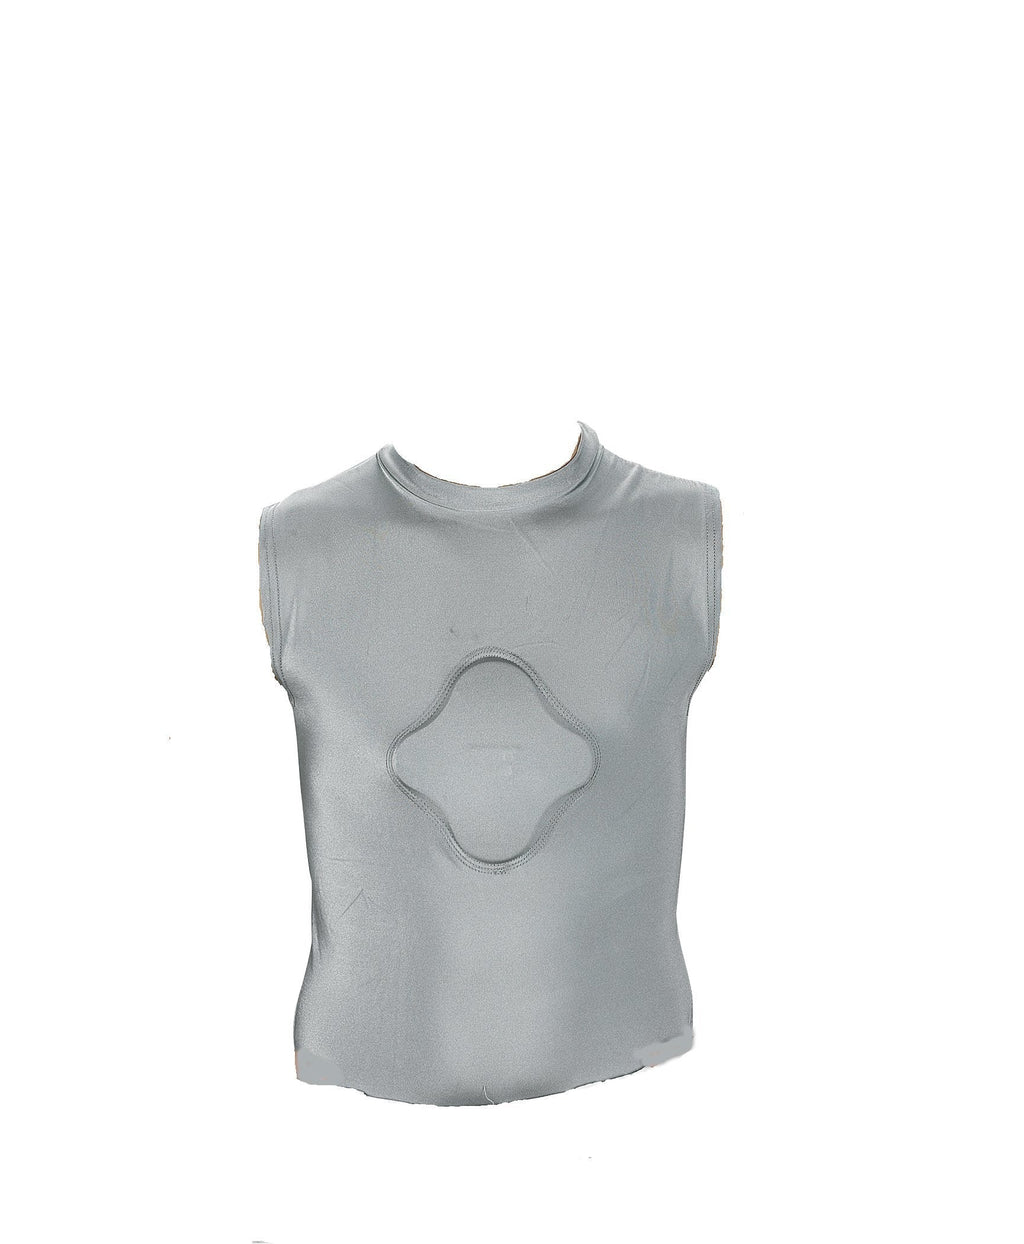 [AUSTRALIA] - Markwort Adult Heart Gard Protective Body Shirt (Grey) Small 